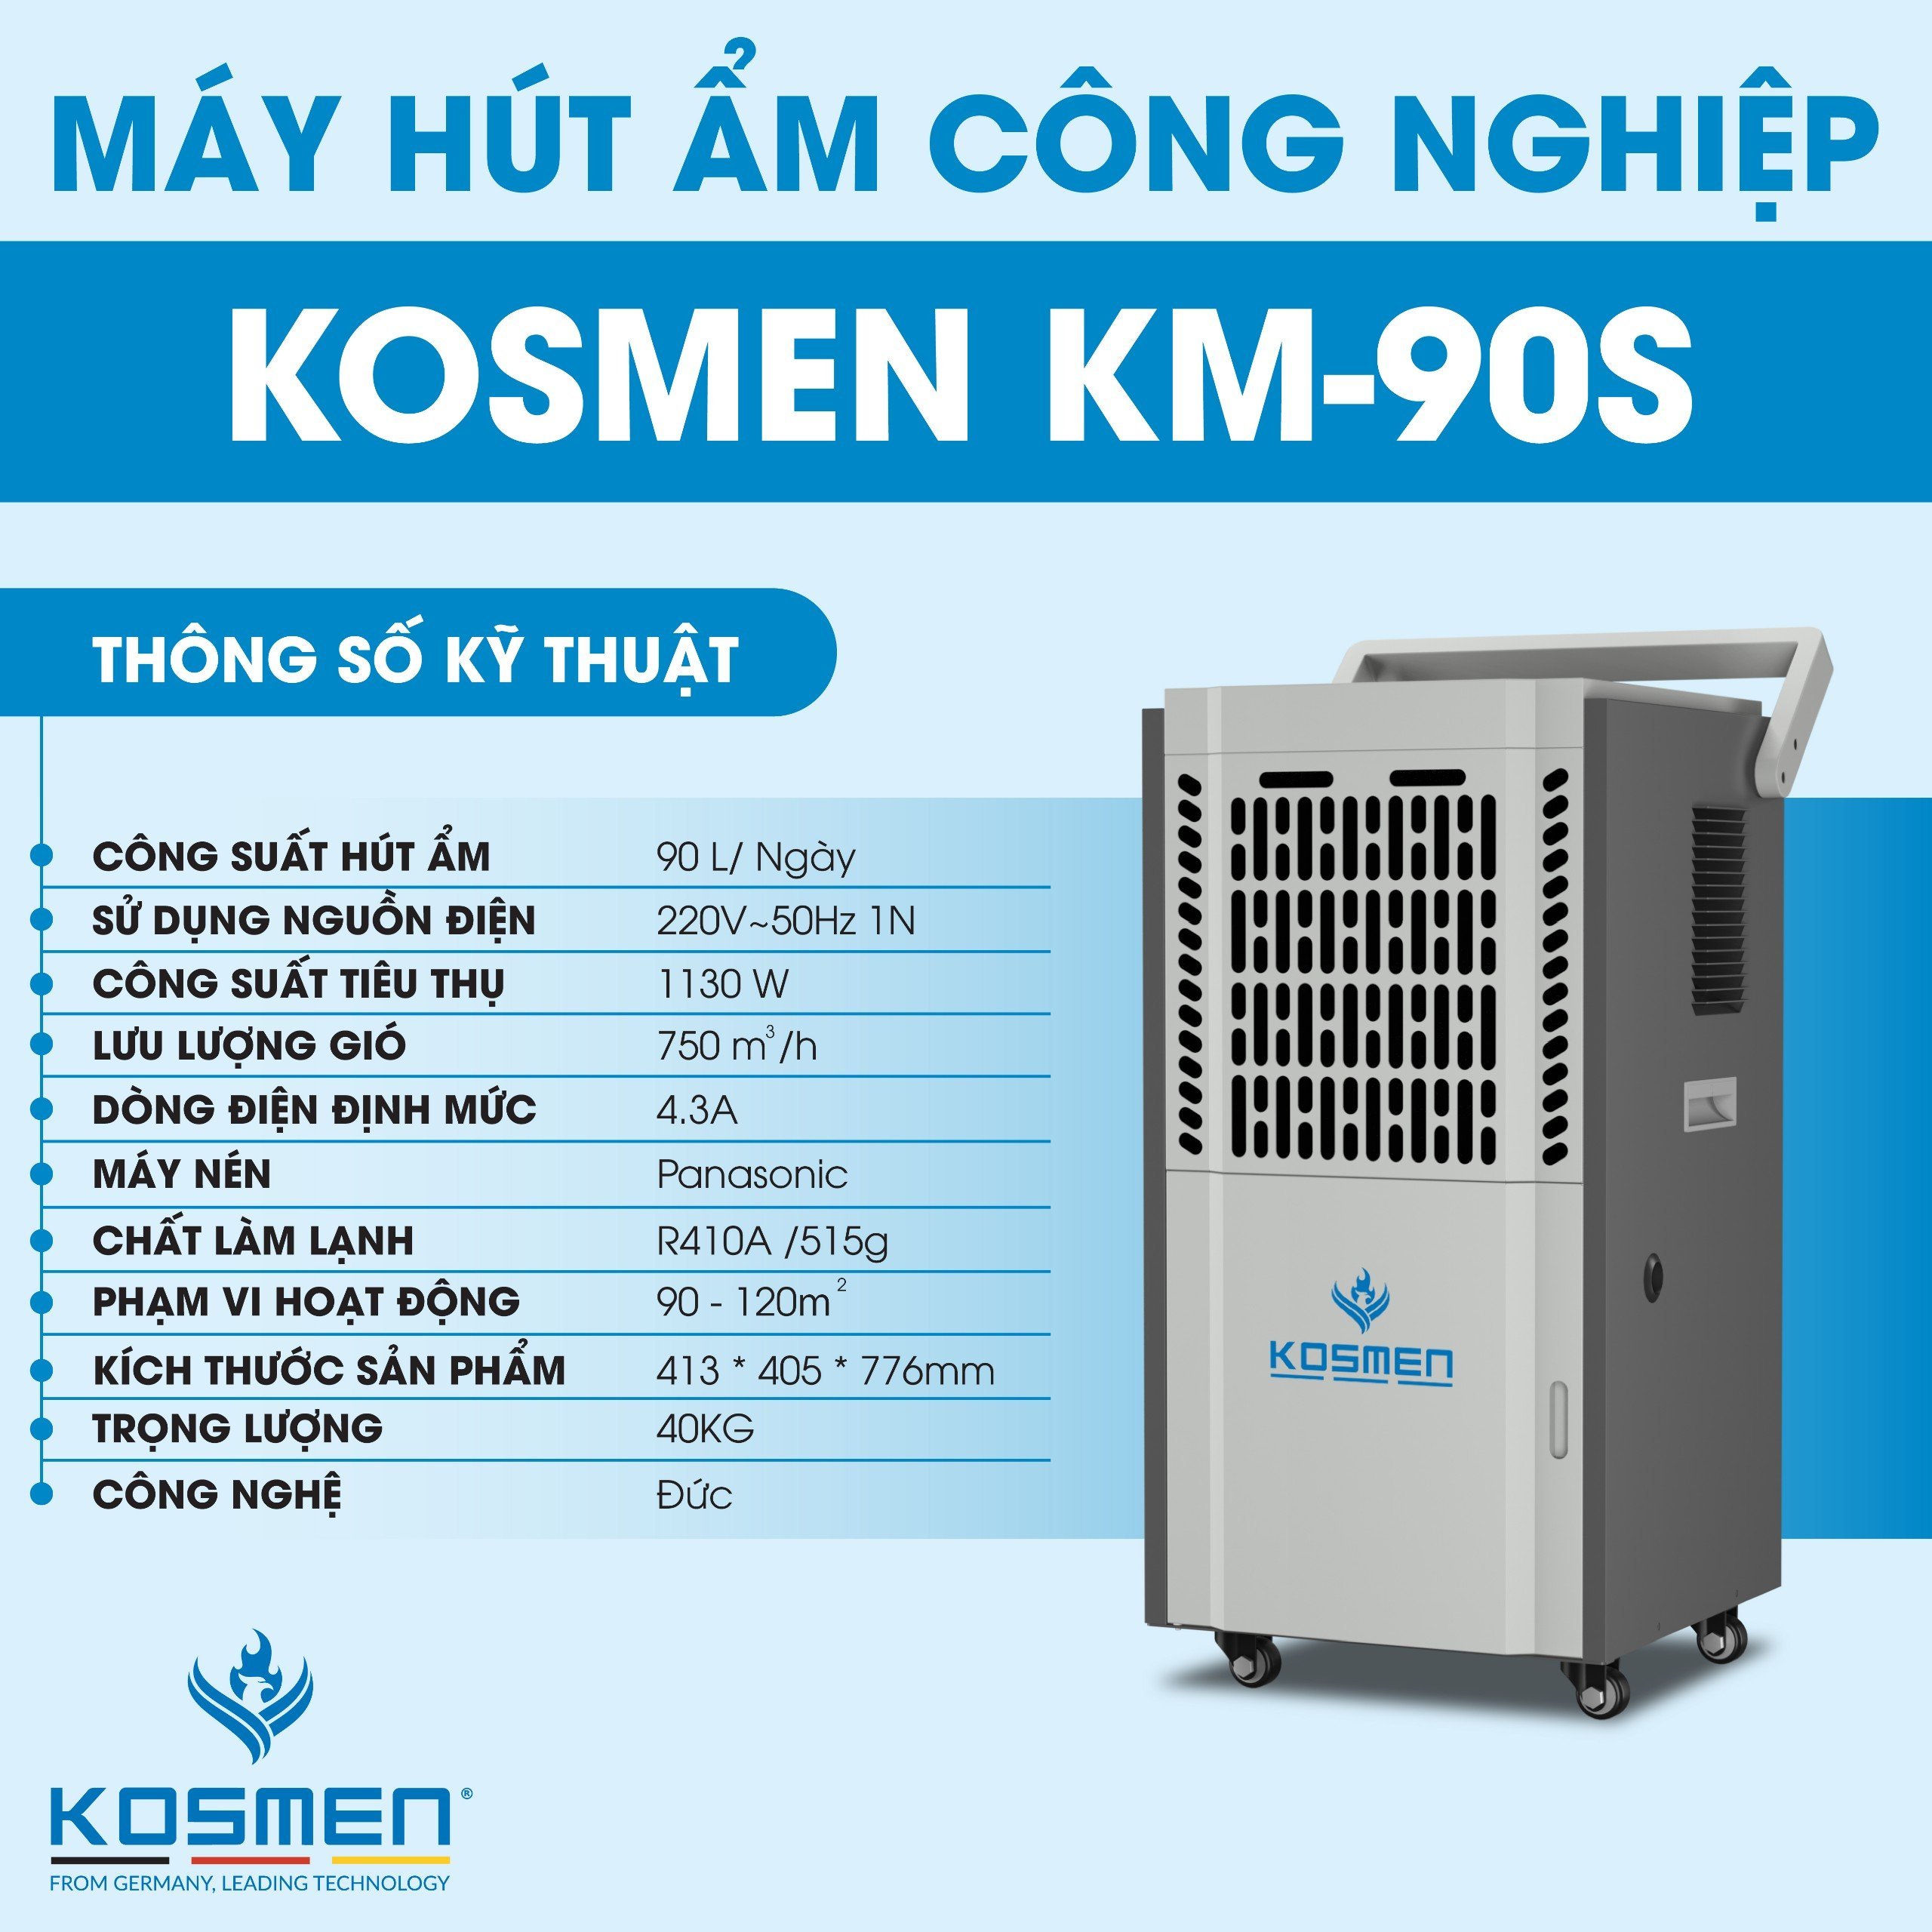 may-hut-am-cong-nghiep-kosmen-km-90s-11.jpg